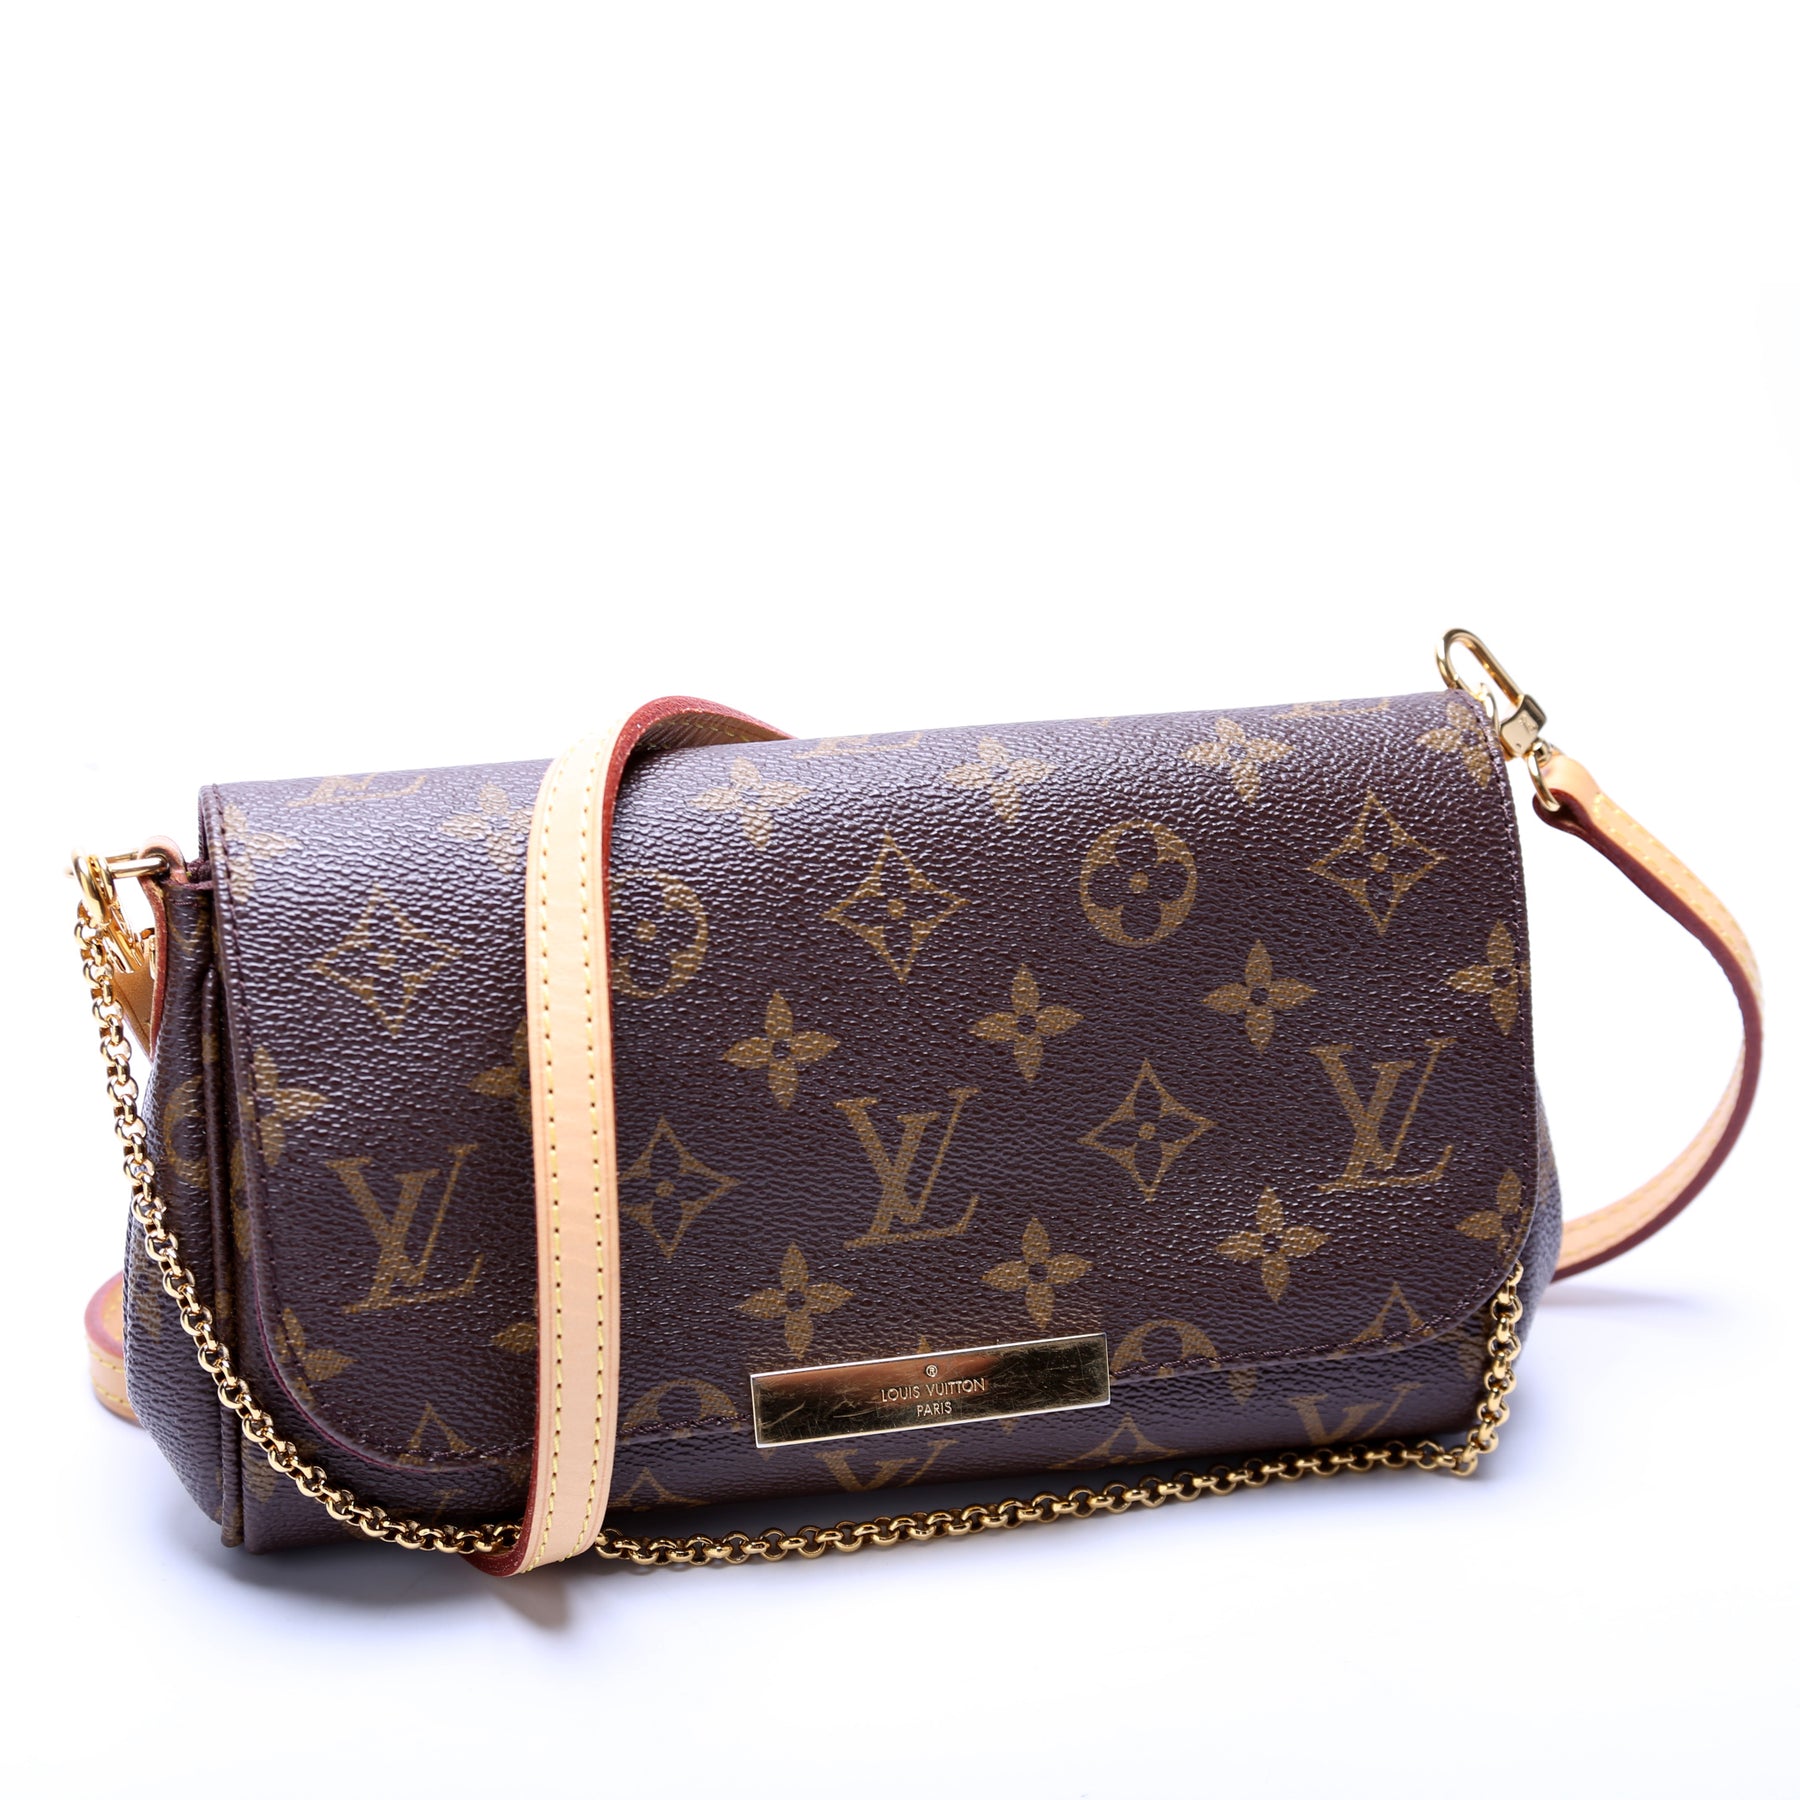 Louis Vuitton Favorite PM crossbody sidebag